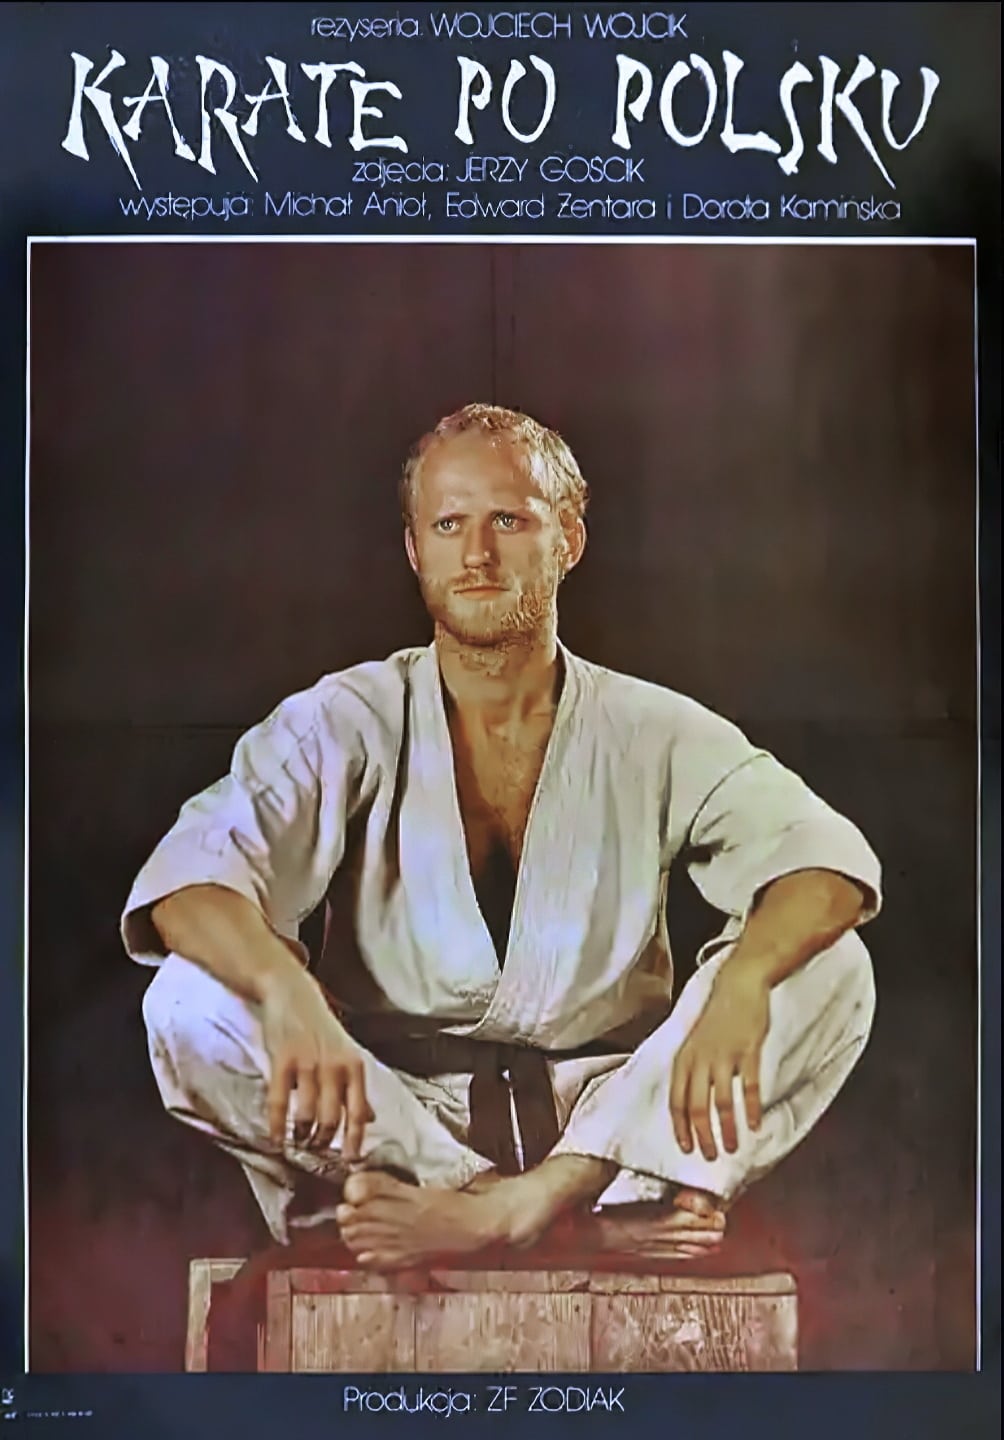 Karate po polsku (1982) - Posters — The Movie Database (TMDB)